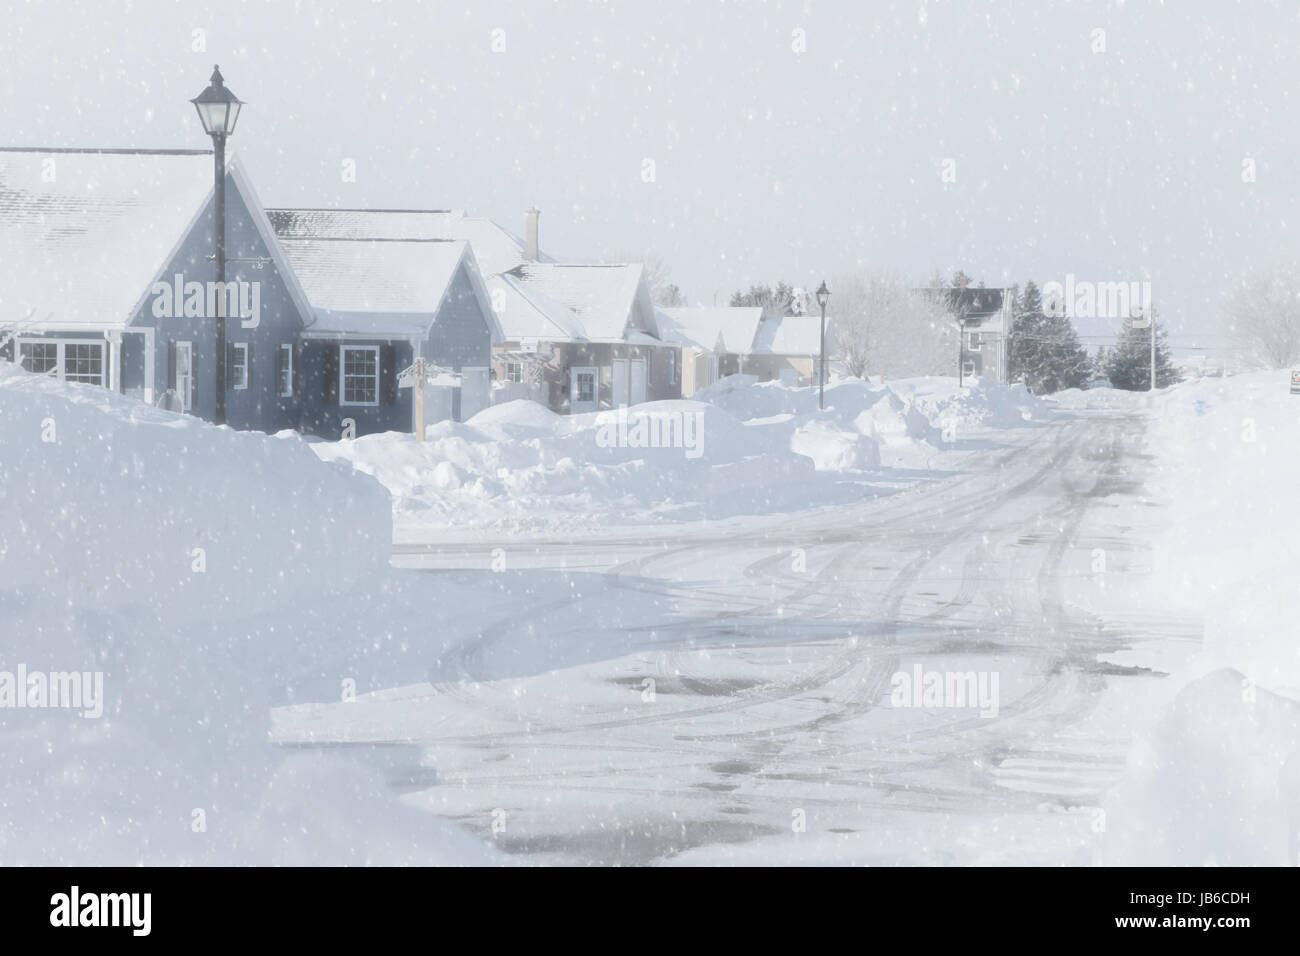 Snow falling in a North American neighborhood. Stock Photo